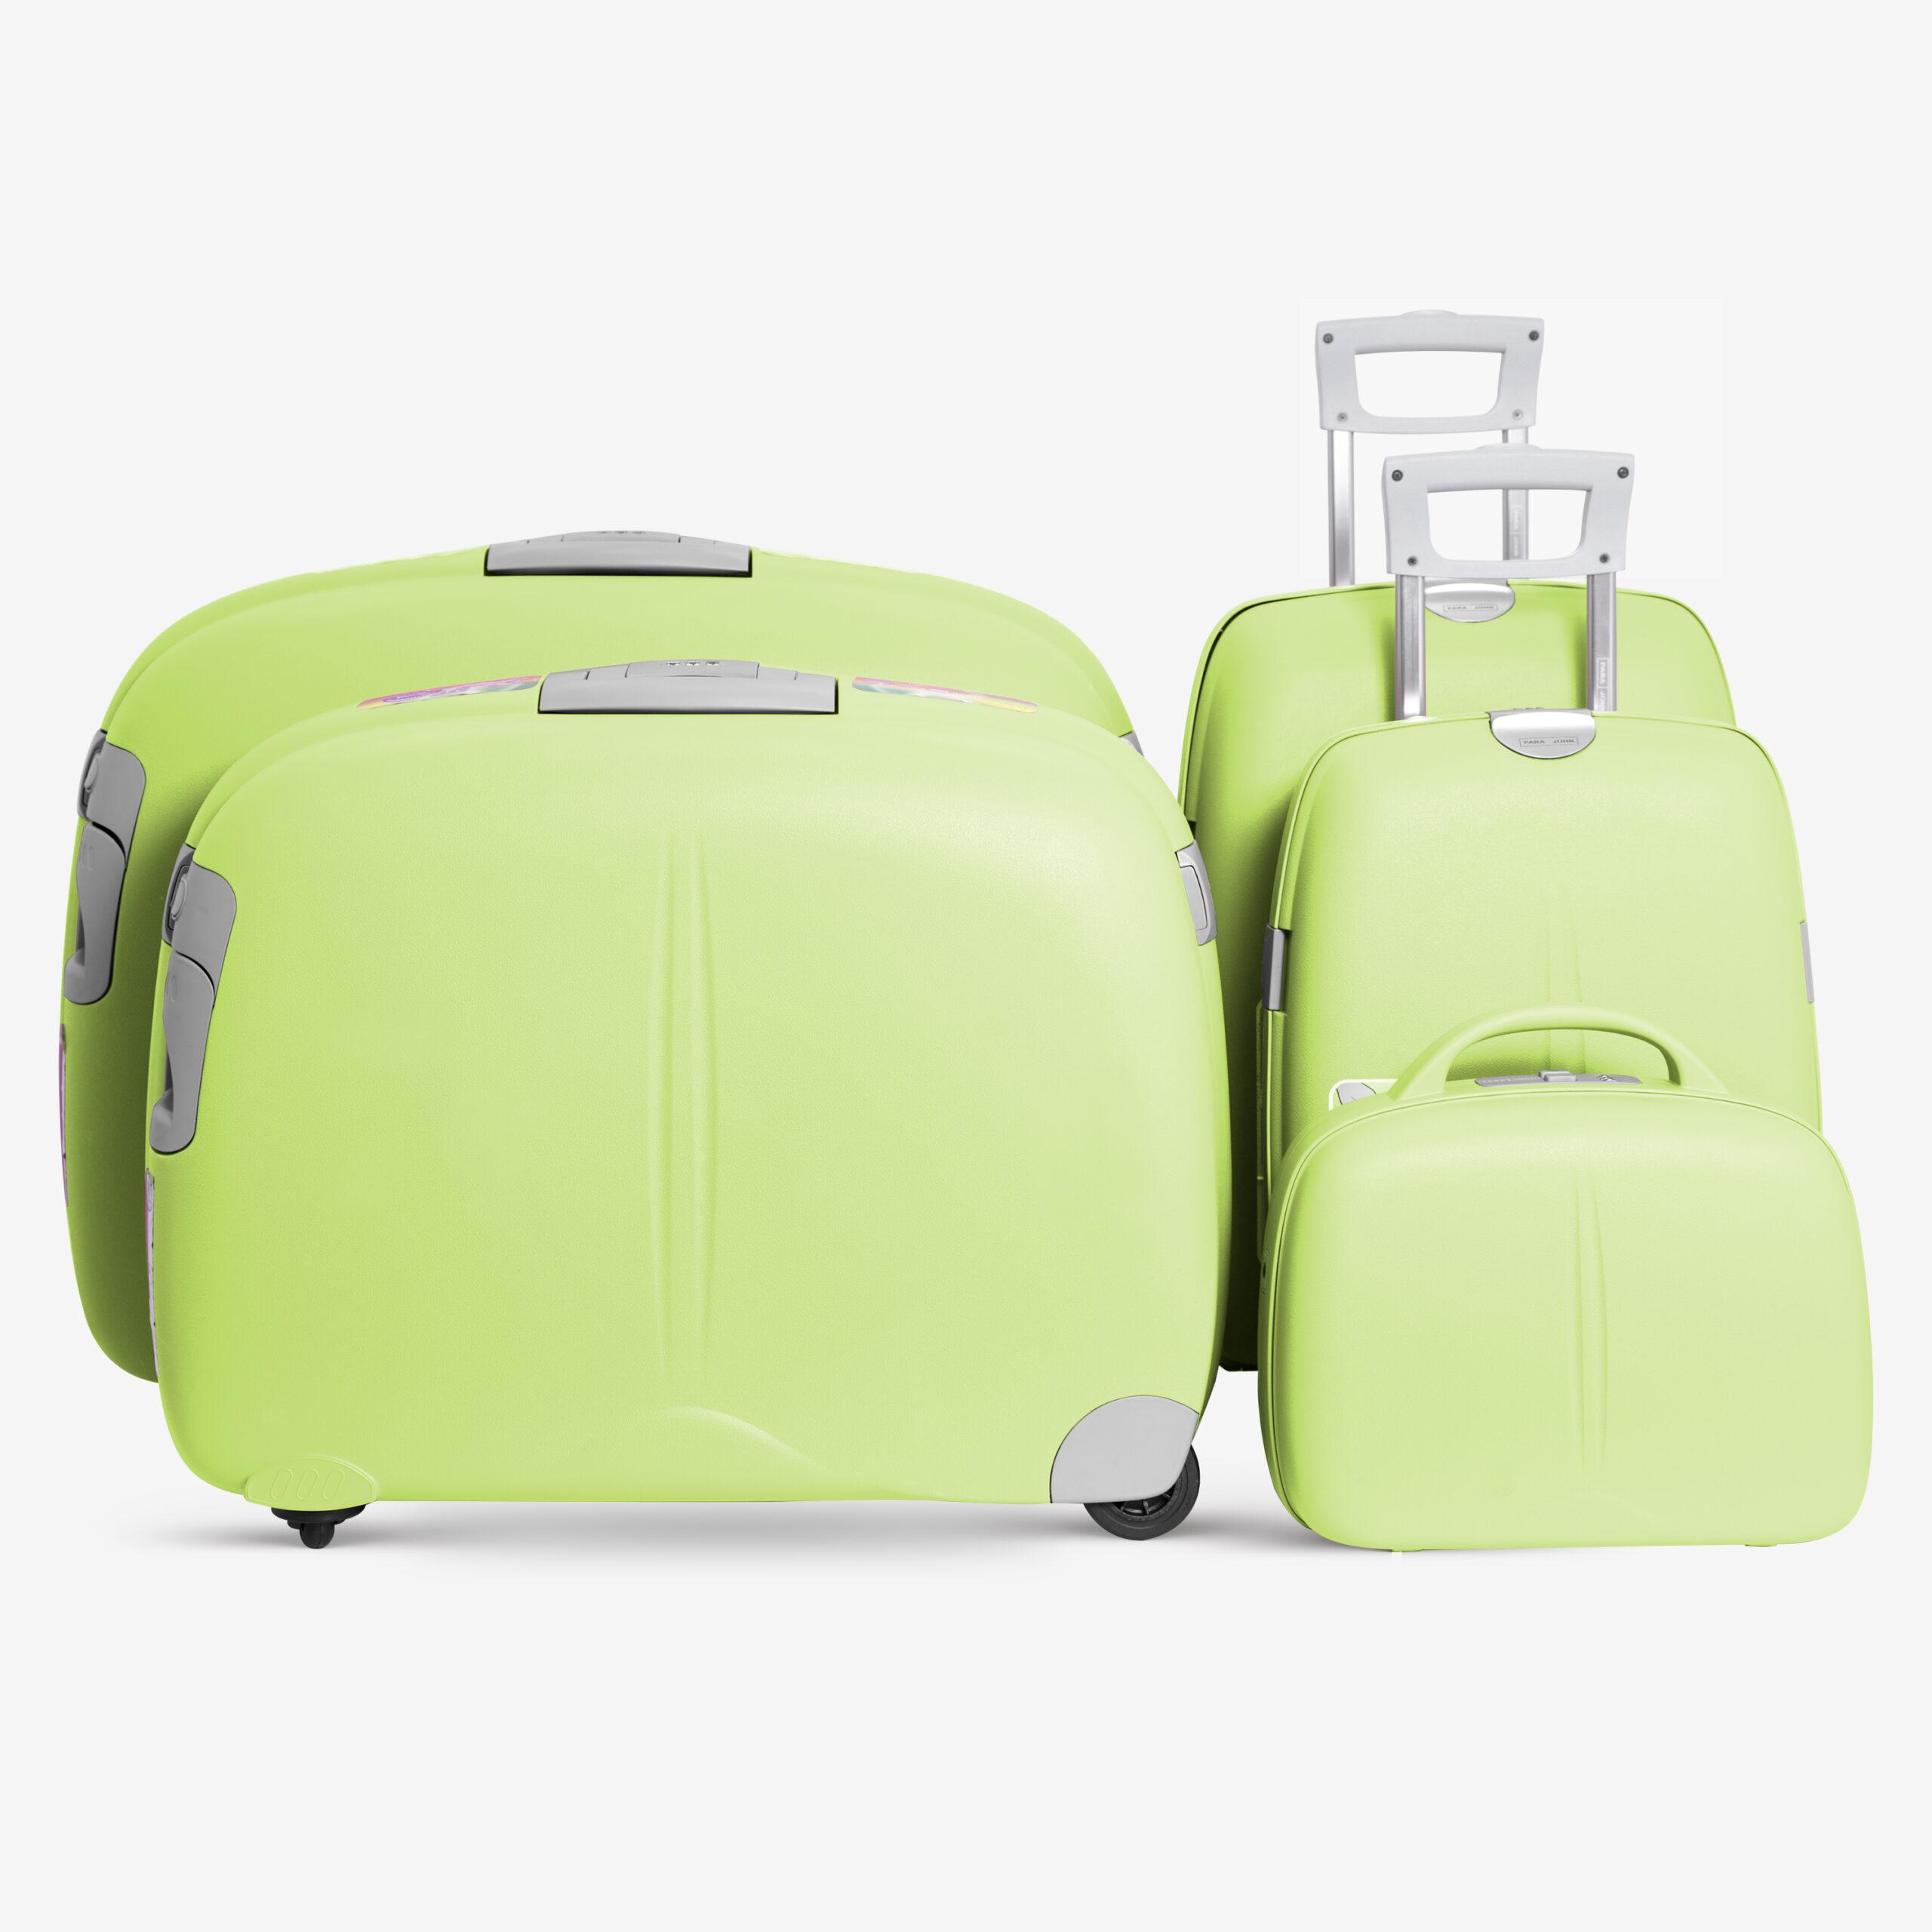 طقم حقائب سفر دوارة 5 حقائب (14 ، 18 ، 22 ، 27 ، 31) بوصة PP أخضر PARA JOHN - Travel Luggage Suitcase Set of 5 - Trolley Bag – Lightweight Travel Bags with 360° Durable 4 Spinner Wheels - Hard Shell Luggage Spinner -(14 ، 18 ، 22 ، 27 ، 31) inch